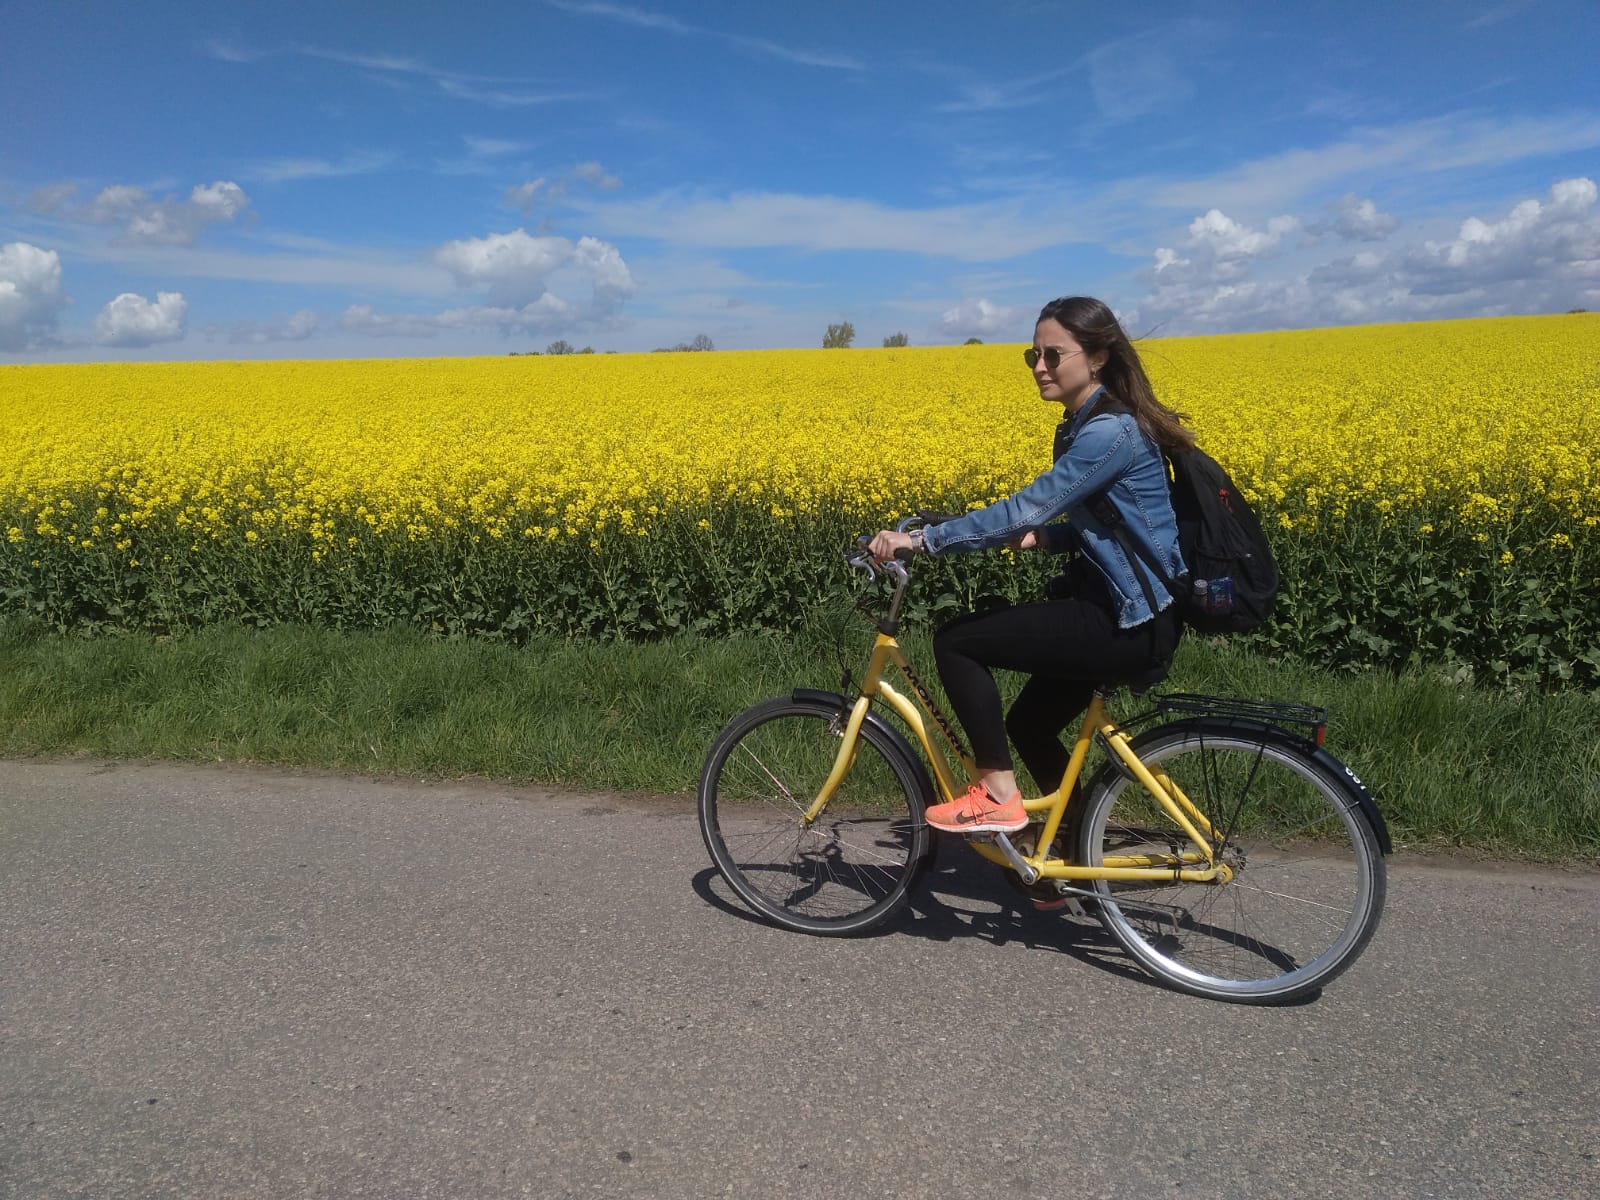 Chiara Nava riding bike in fields